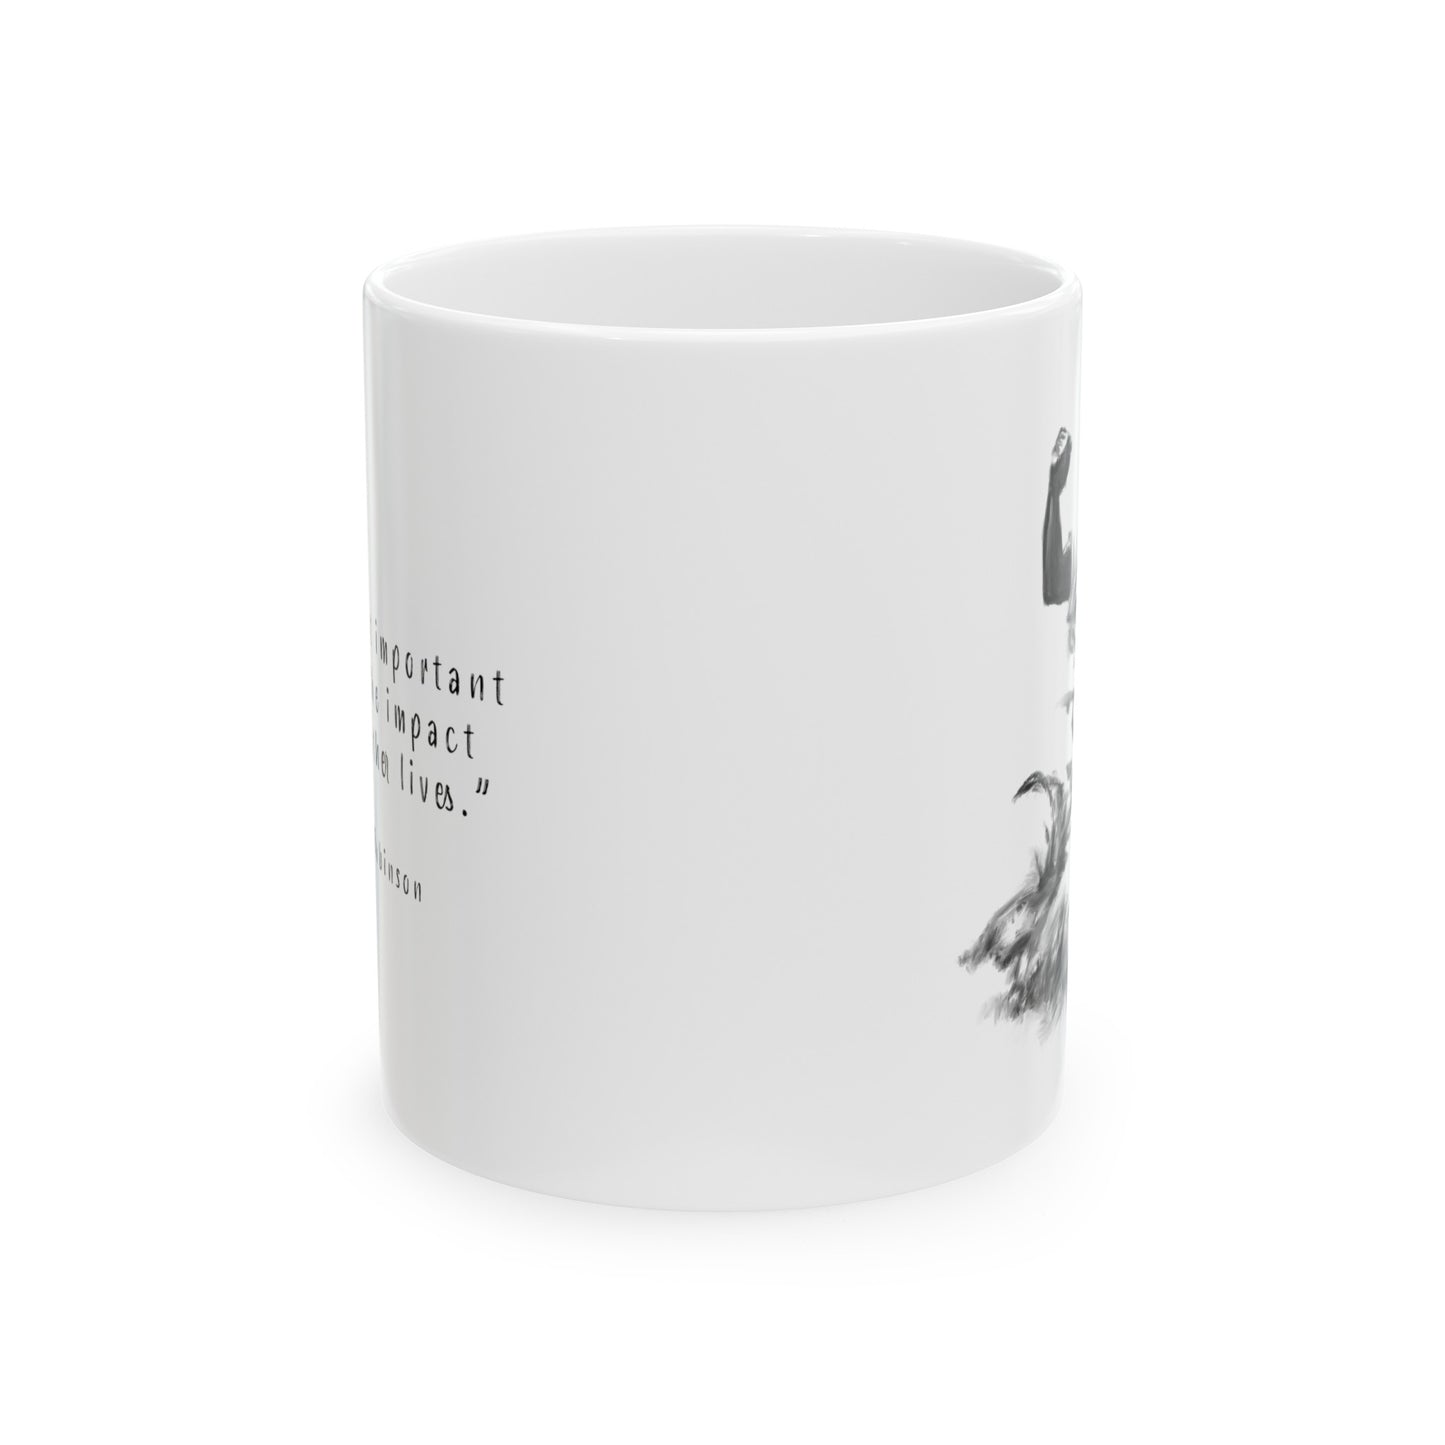 Jackie Robinson | Coffee Mug